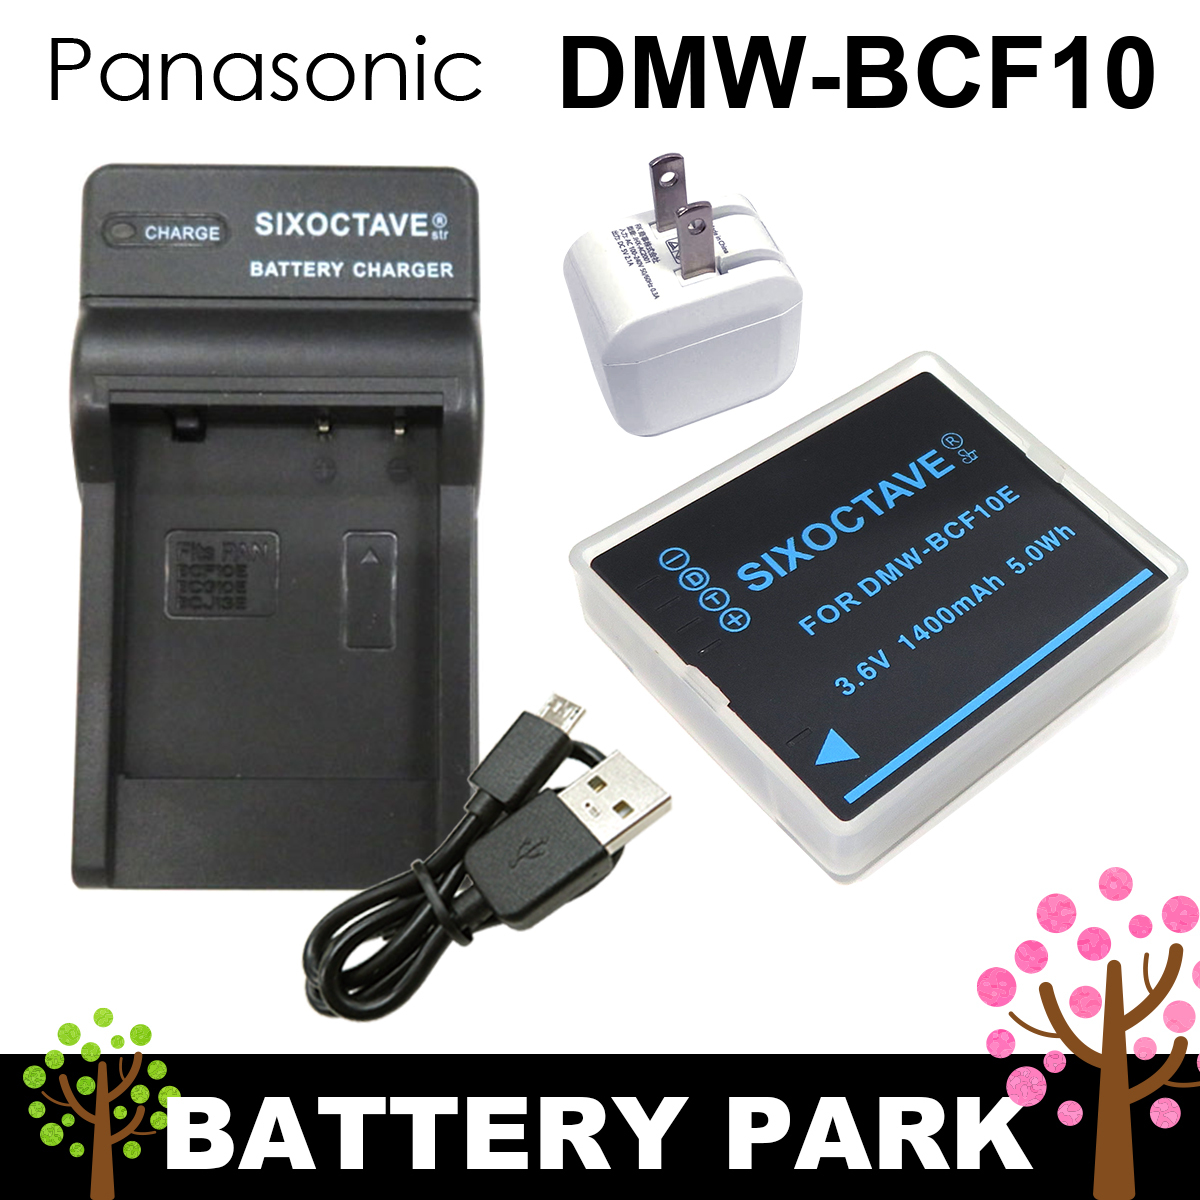 Panasonic DMW-BCF10 互換バッテリーと互換USB充電器 2.1A高速ACアダプター付 Lumix DMC-FX70/ Lumix  DMC-FX550/ Lumix DMC-FX580(パナソニック)｜売買されたオークション情報、yahooの商品情報をアーカイブ公開 -  オークファン（aucfan.com）